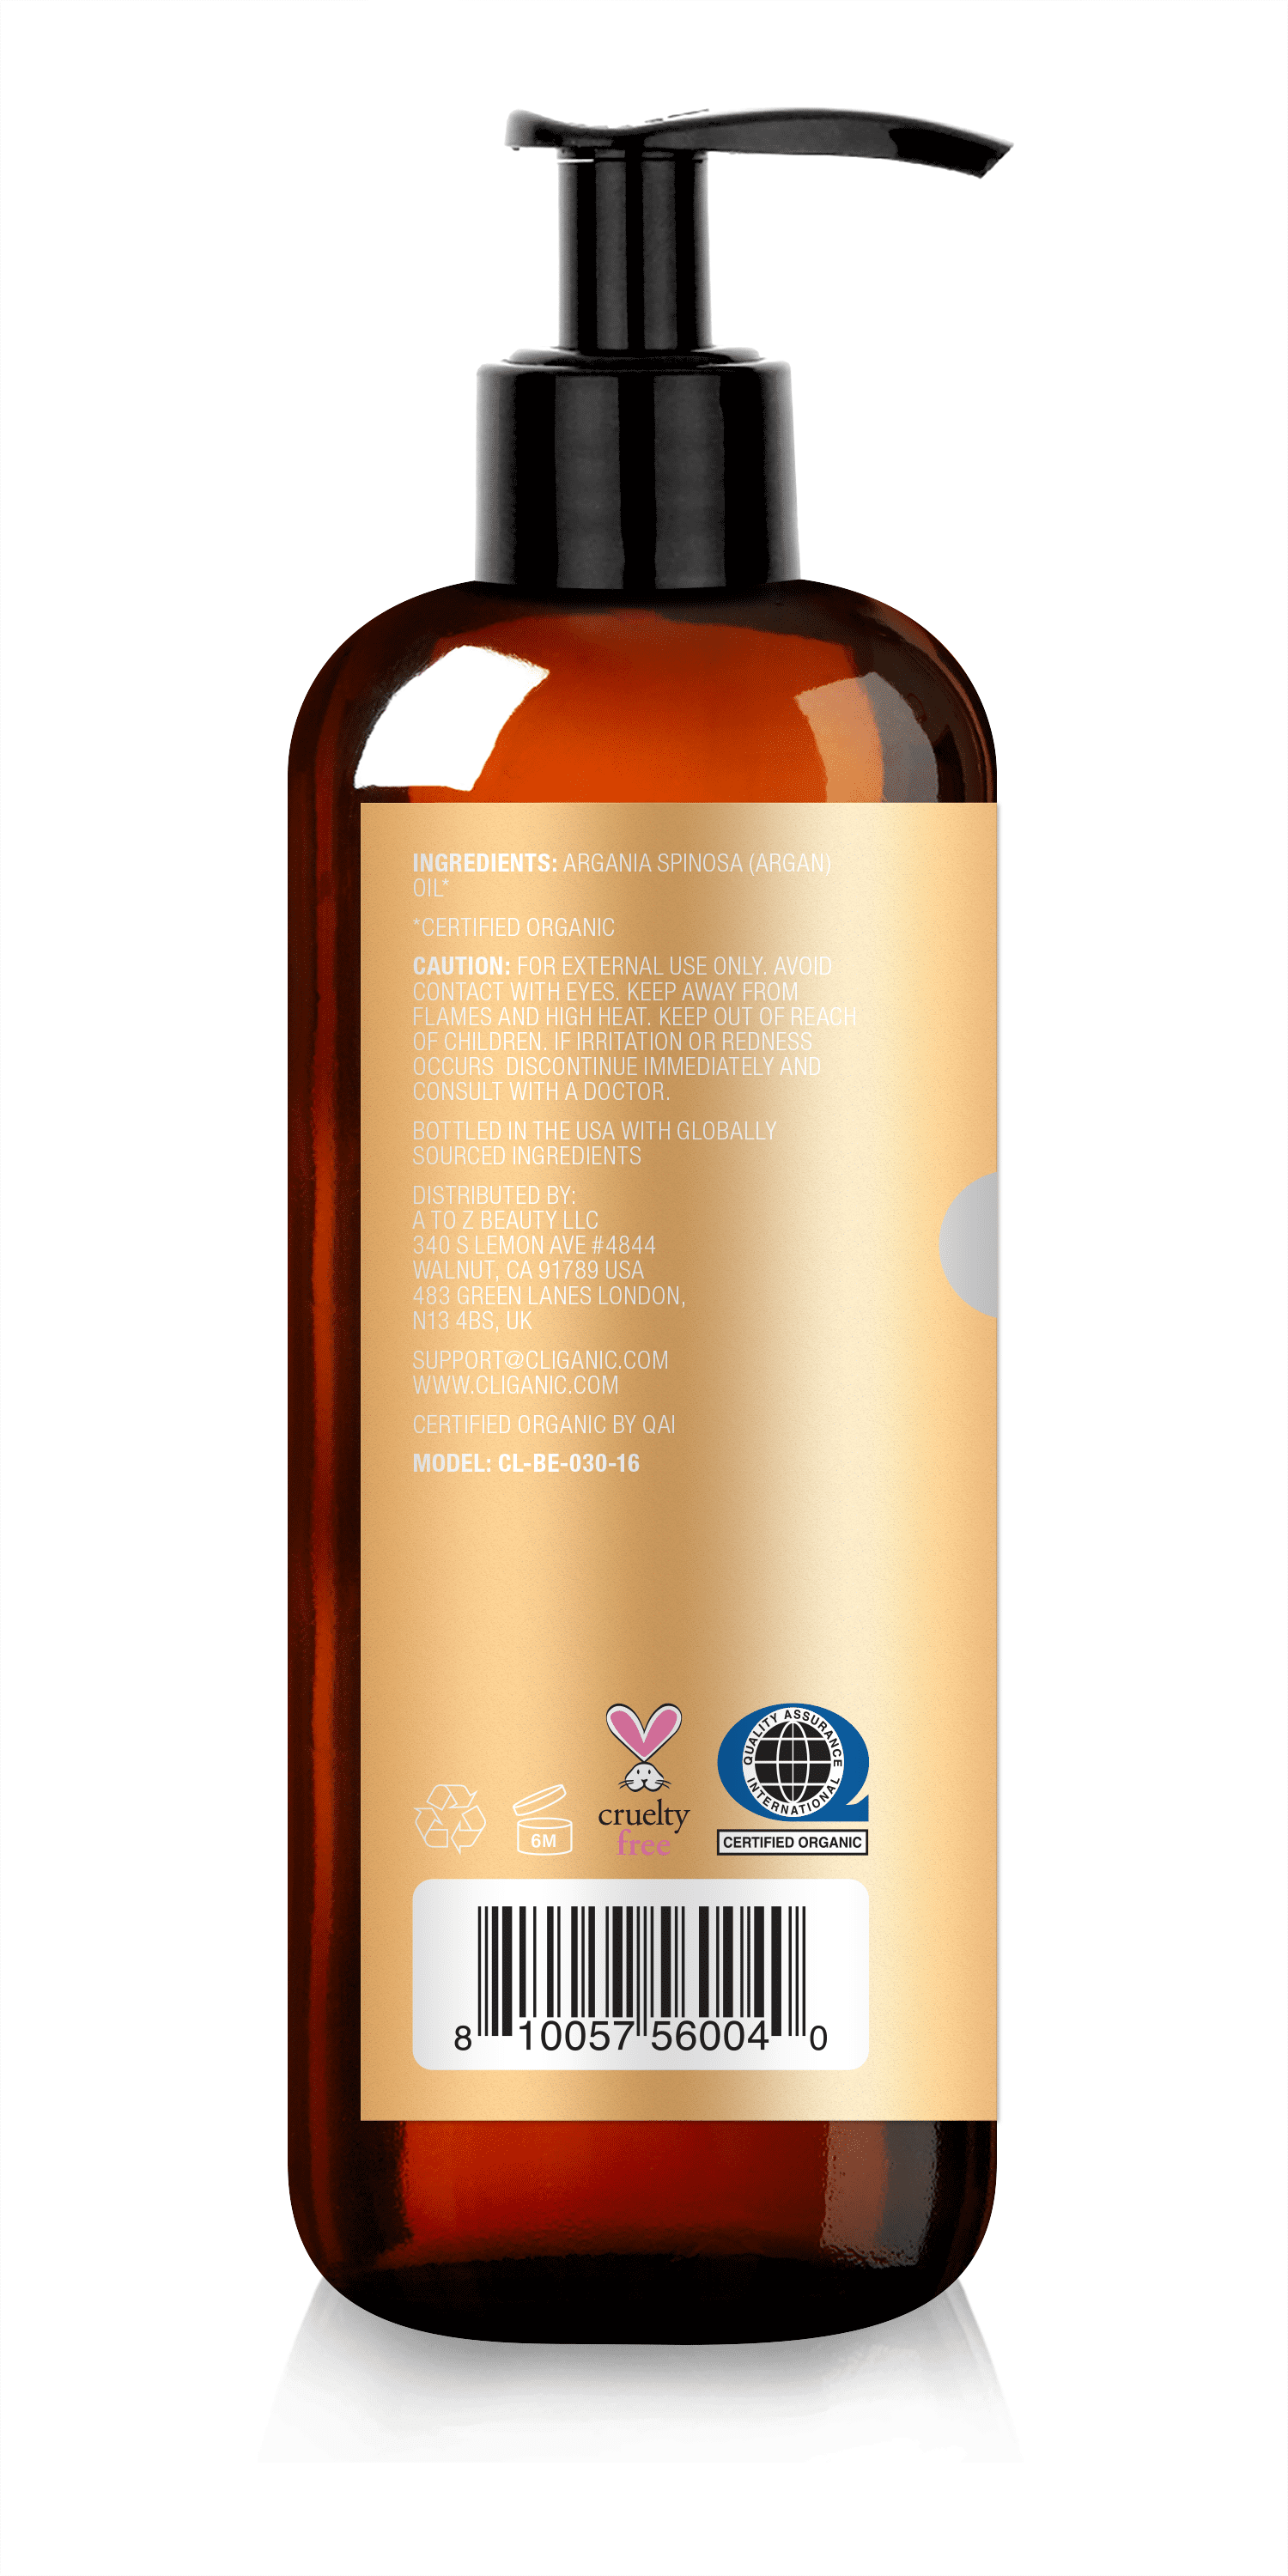 Cliganic USDA Organic Argan Oil, 120 ml - Dubai Beauty Wholesale